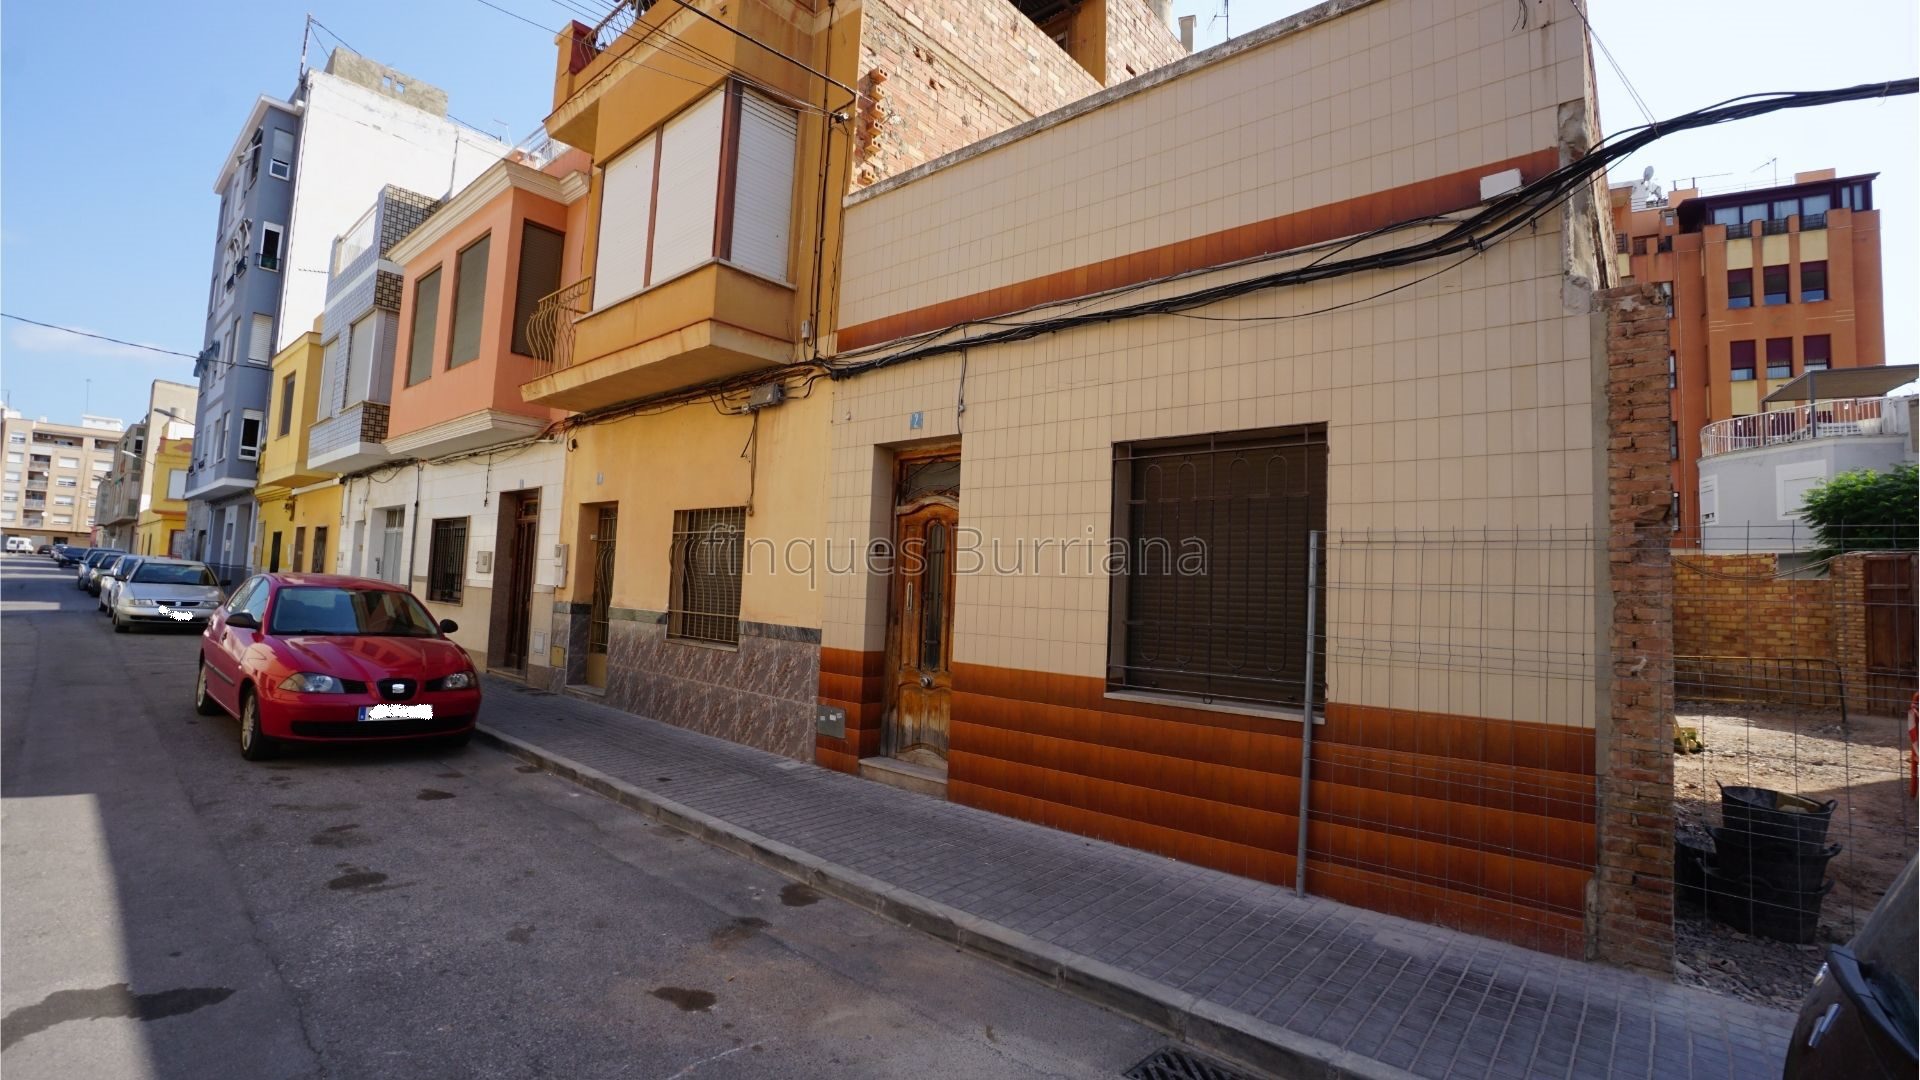 Casa adosada en venta en Burriana (Castellón) zona Ronda Panderola 